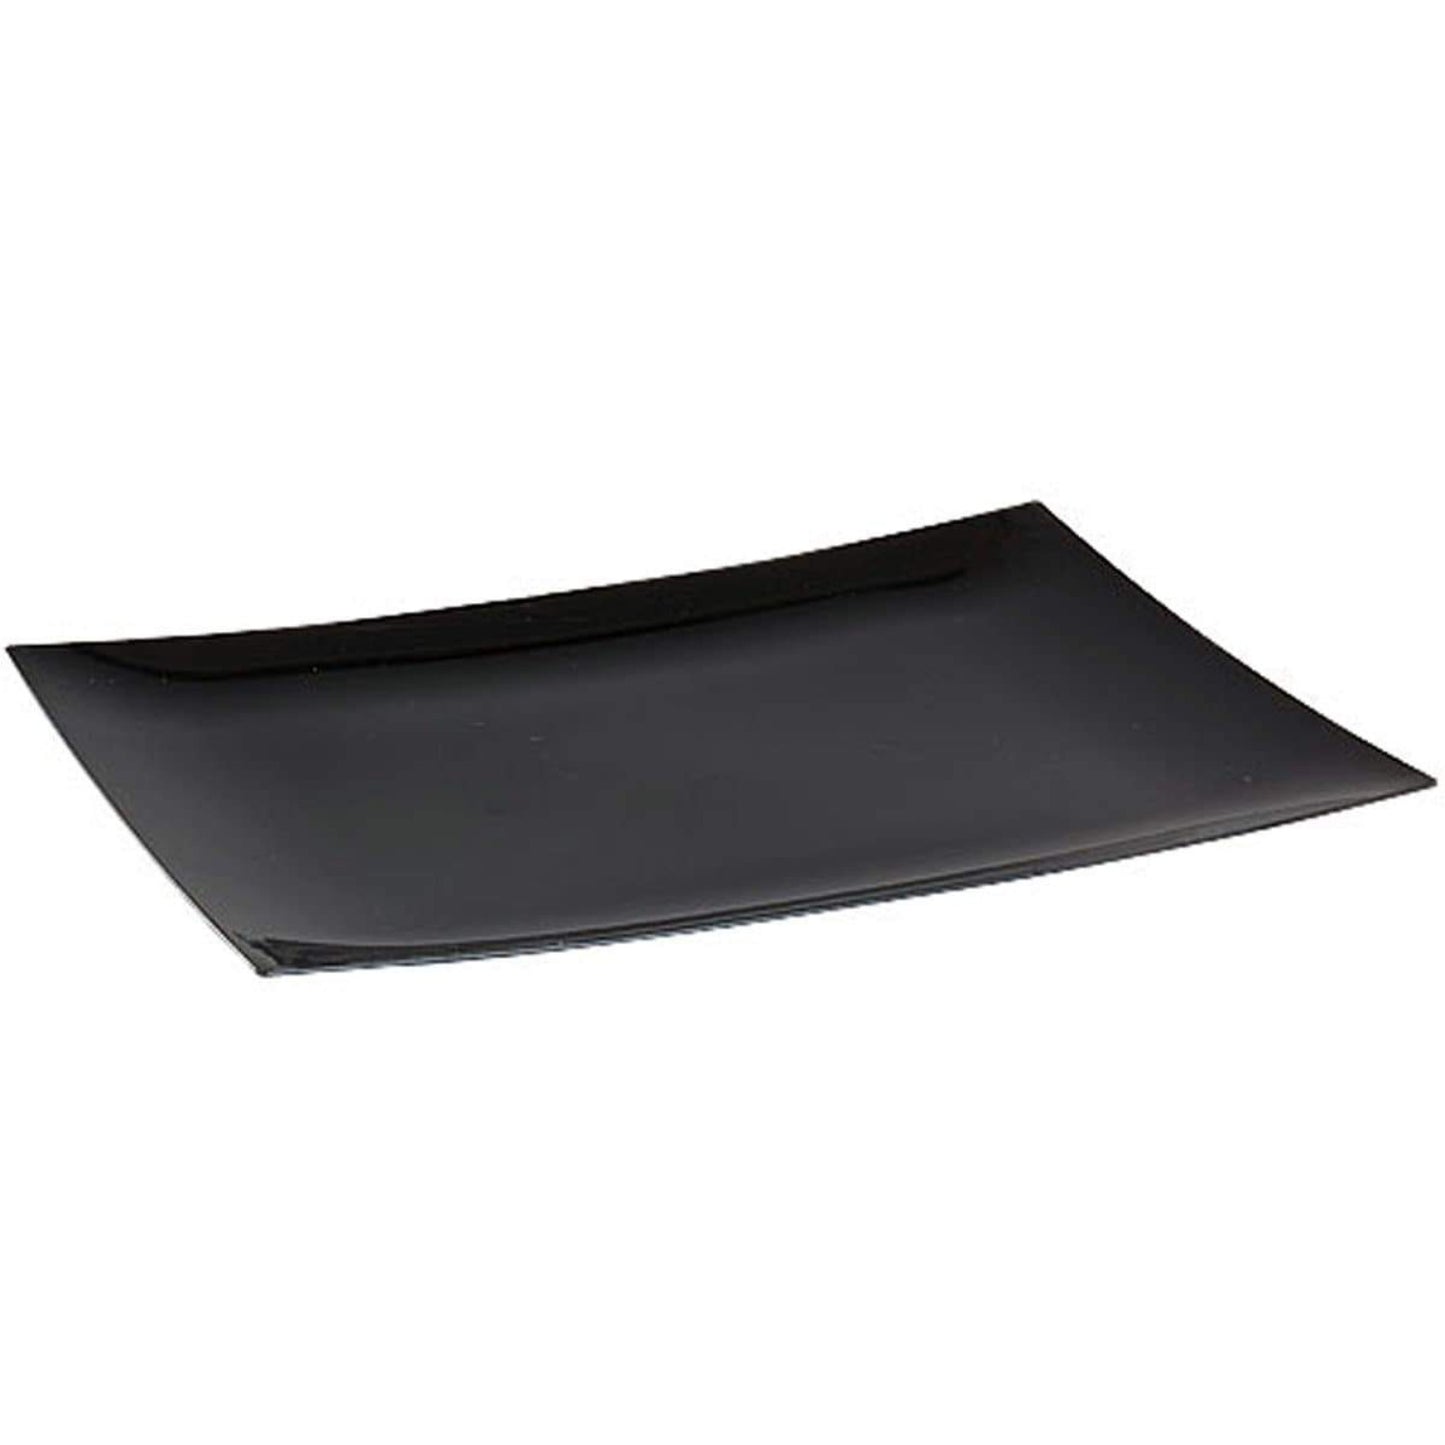 Rectangular Plastic Entree Plates Black 11.75" Plates Lillian Tablesettings   